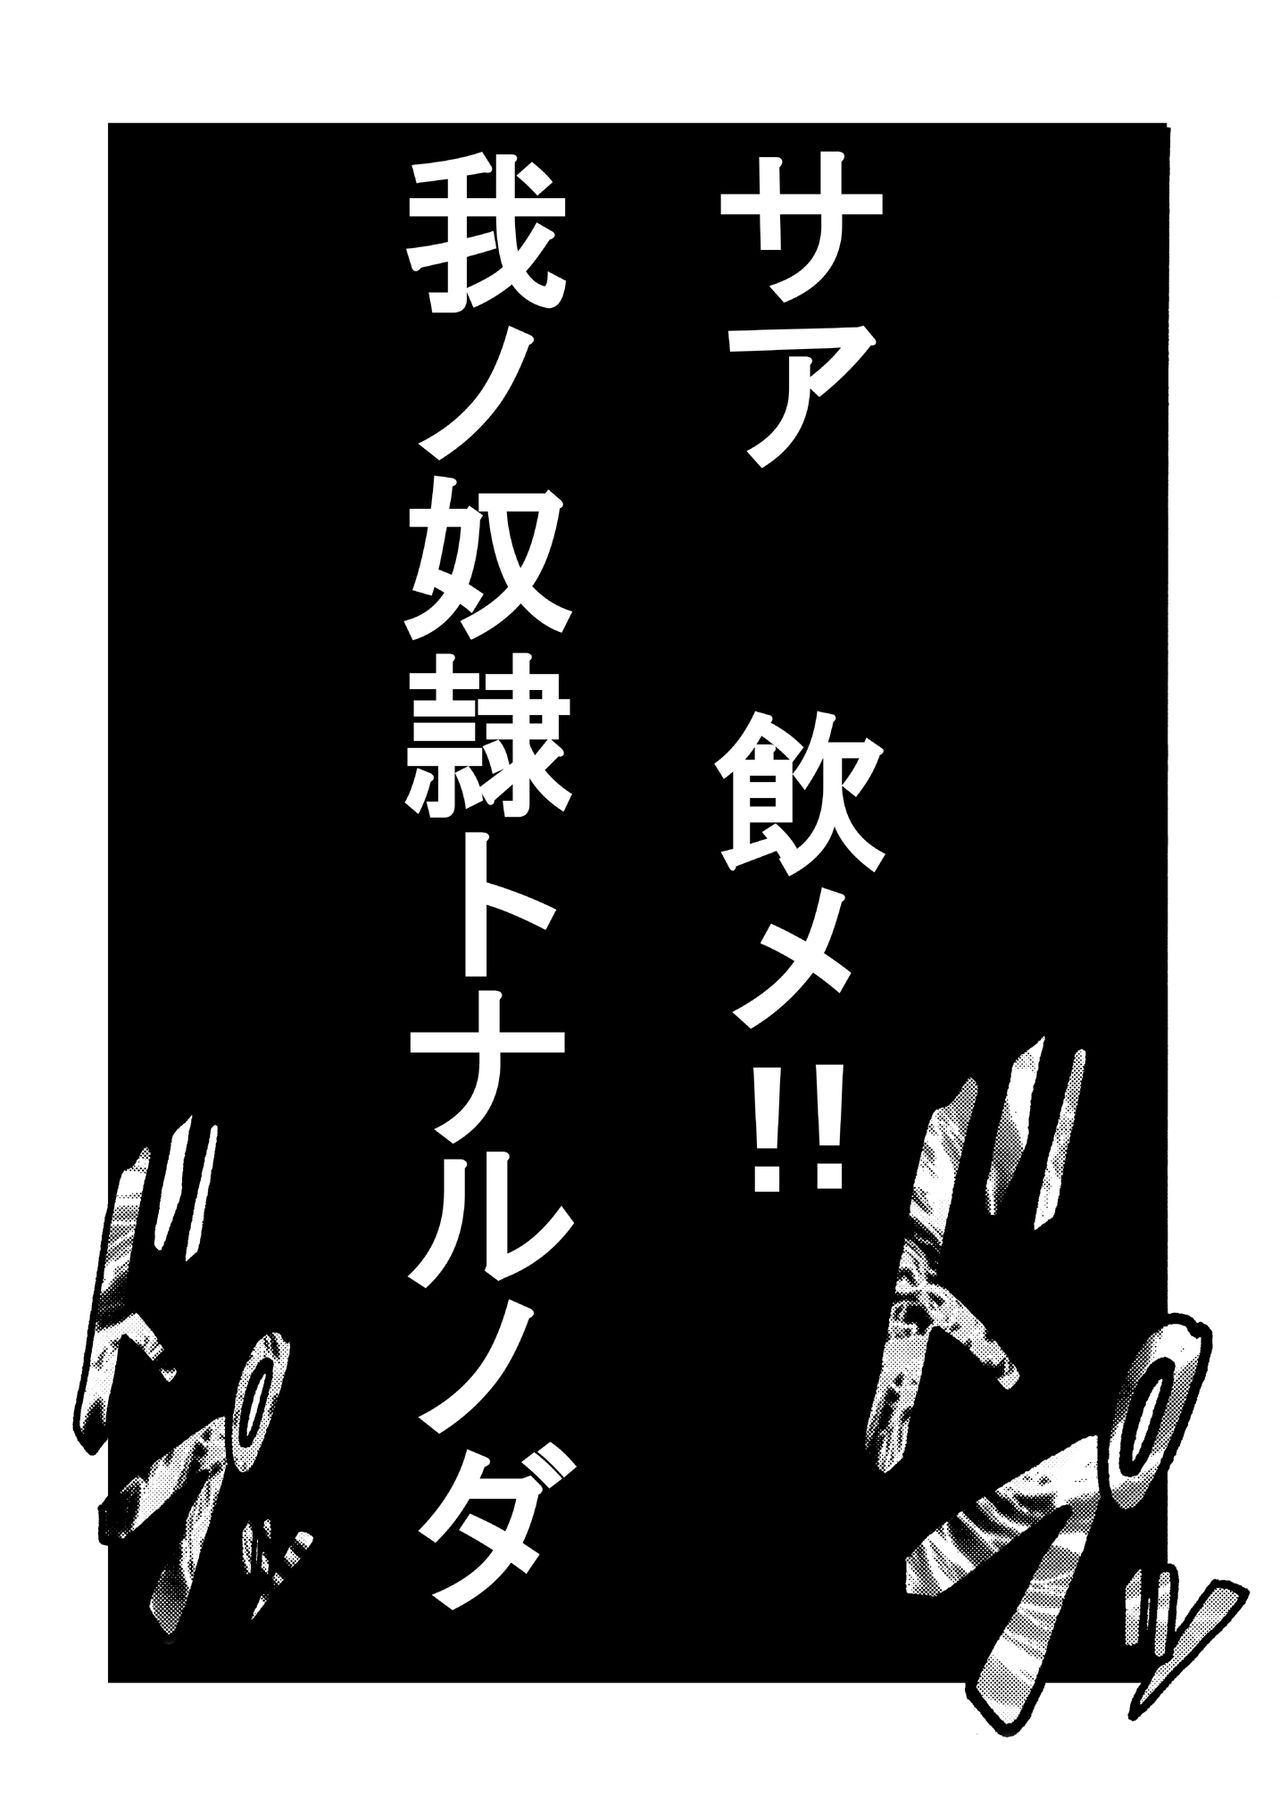 [Light Rate Port Pink] Devil Lain - Akuma no Shokushu Sennou (Mobile Fighter G Gundam) [Digital] [ライト・レイト・ポート・ピンク] Devil Lain 悪魔の触手洗脳(機動武闘伝Gガンダム)[デジタル版]